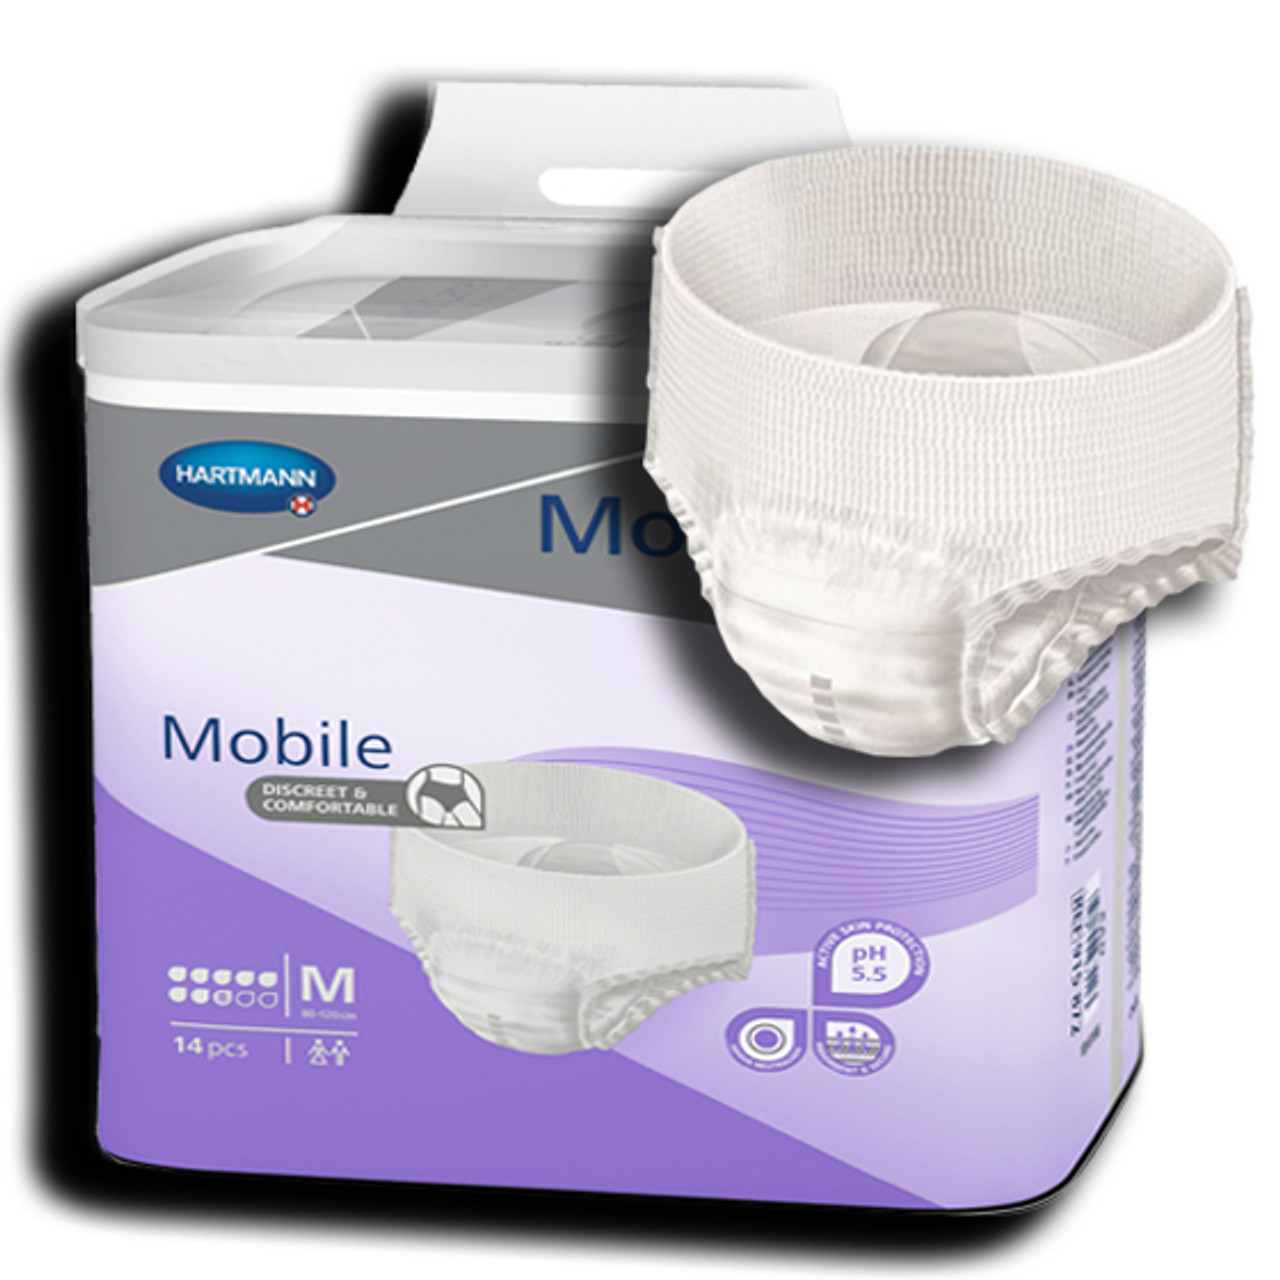 MoliCare Premium Mobile - RainTree Medical